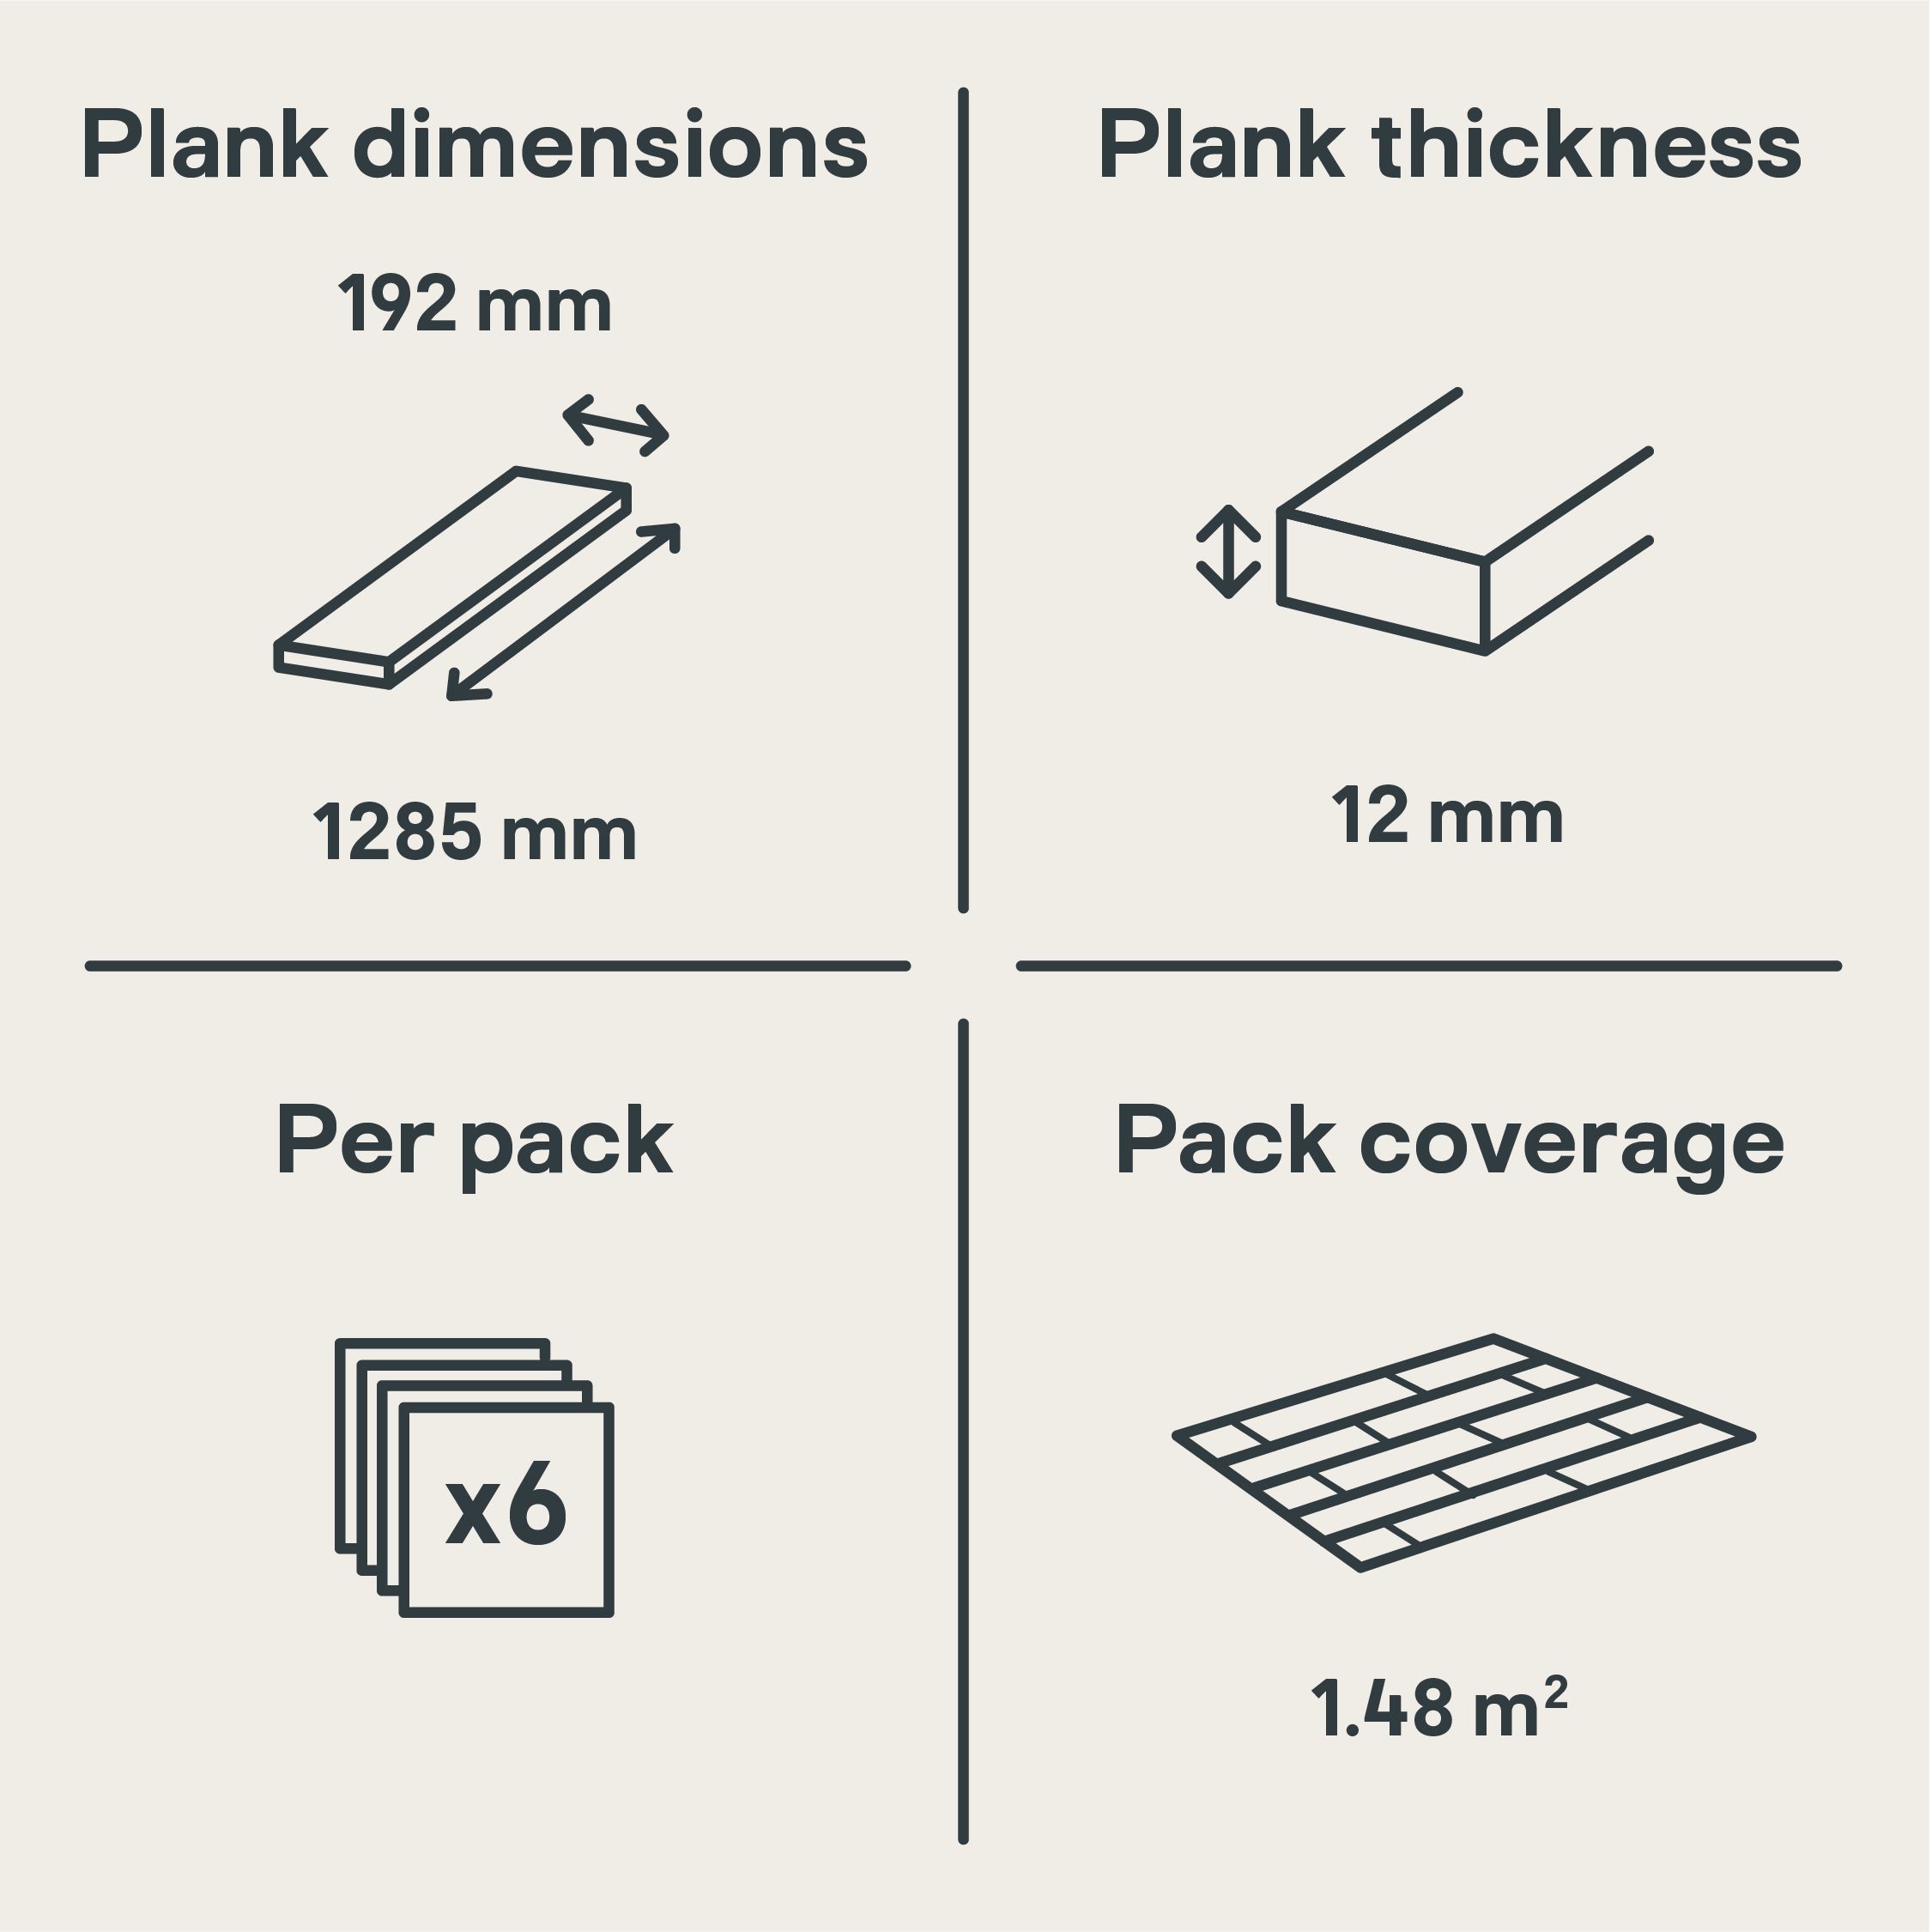 Plank Oak effect Laminate Flooring, 1.48m²